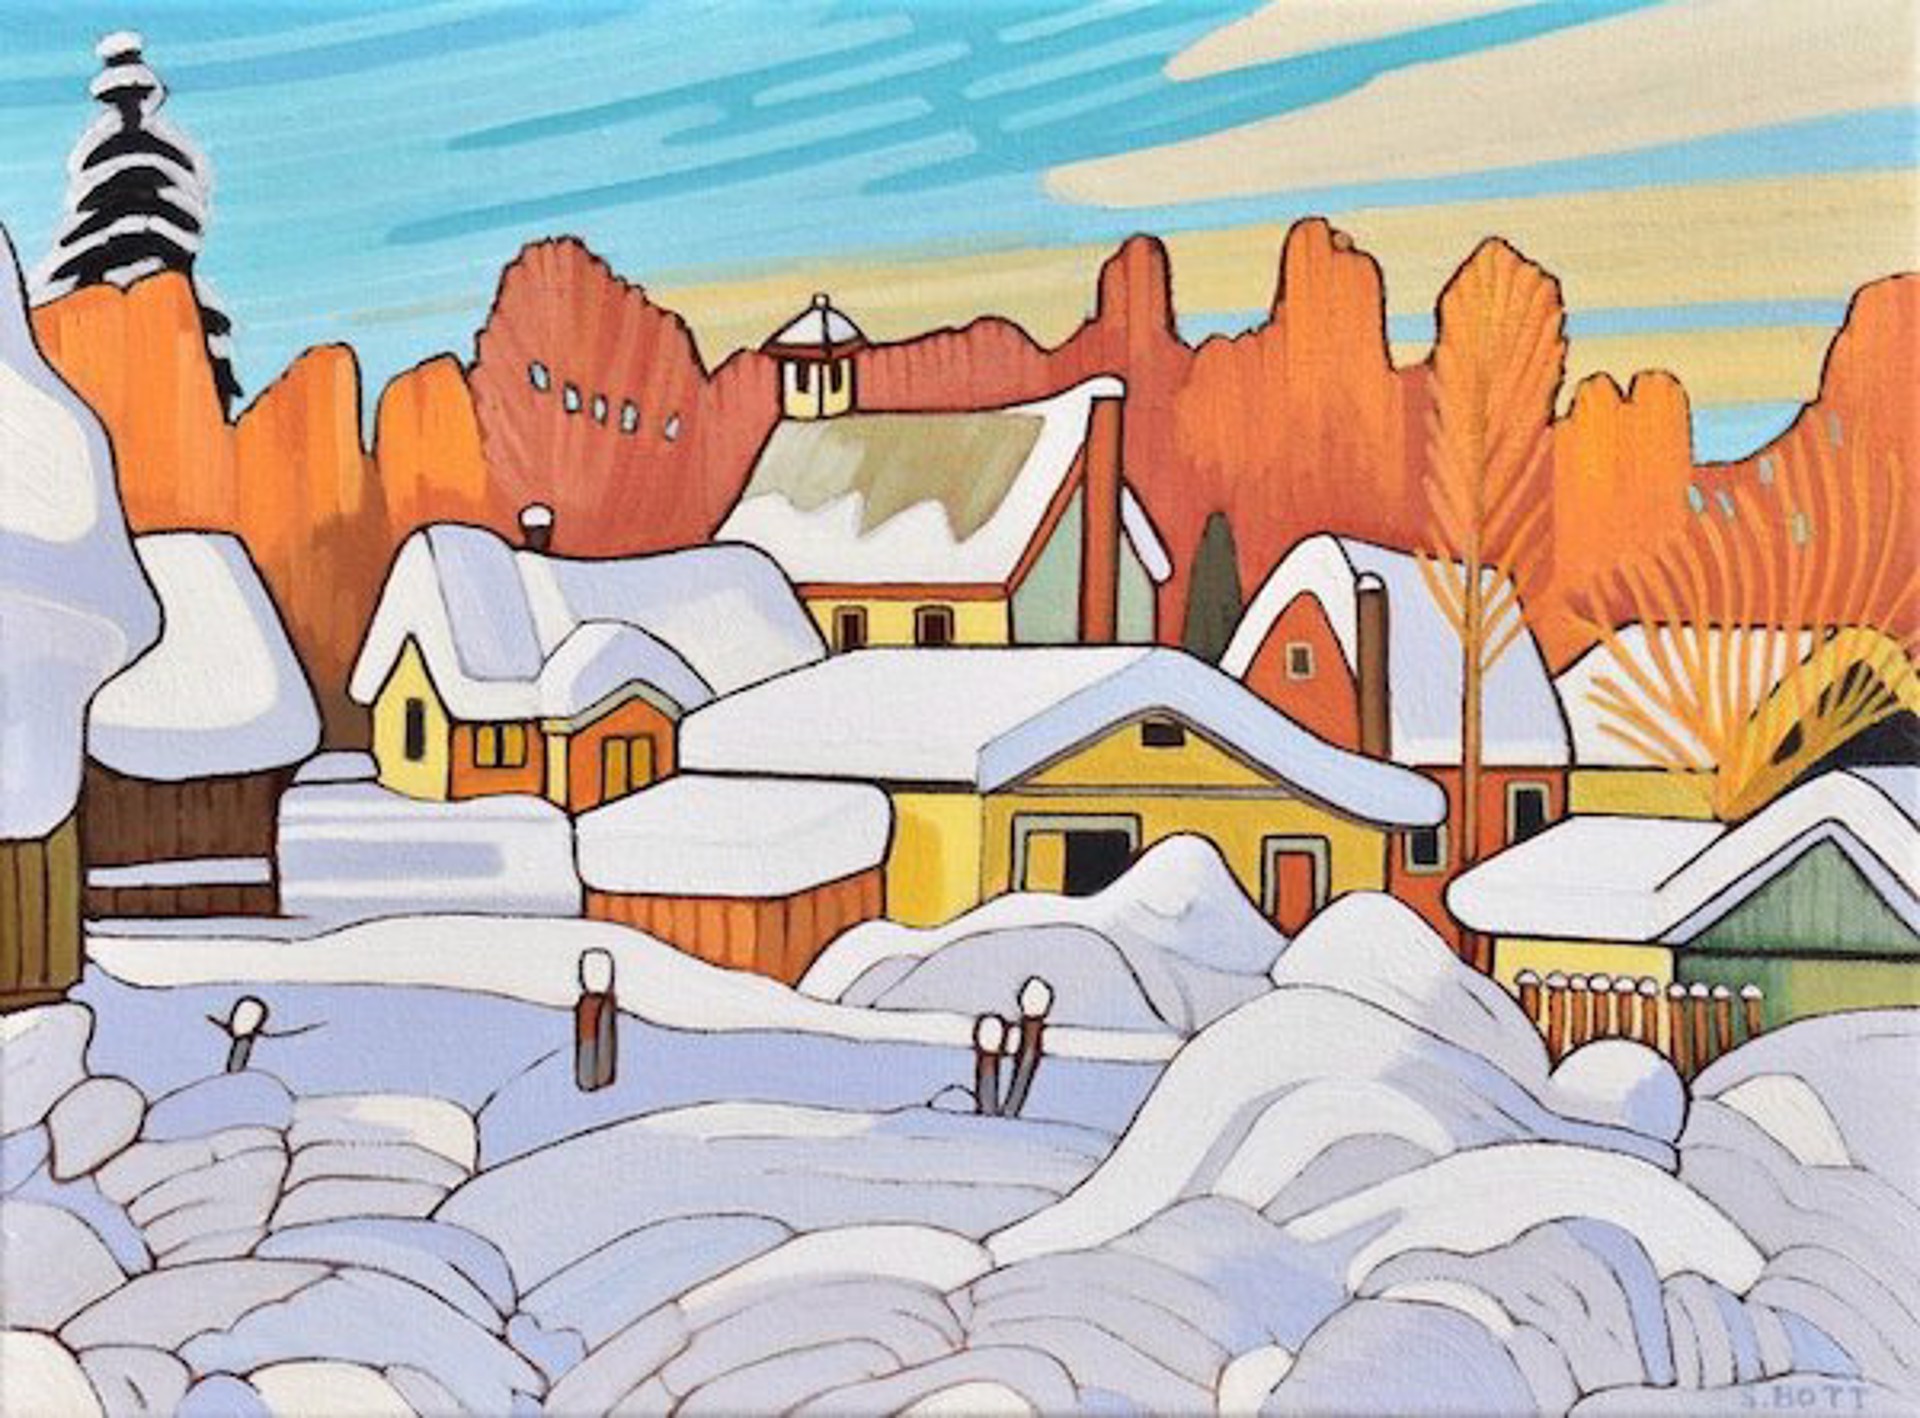 Study of Nicholas Bott's Winter Morning Telkwa BC by Sharon Bott